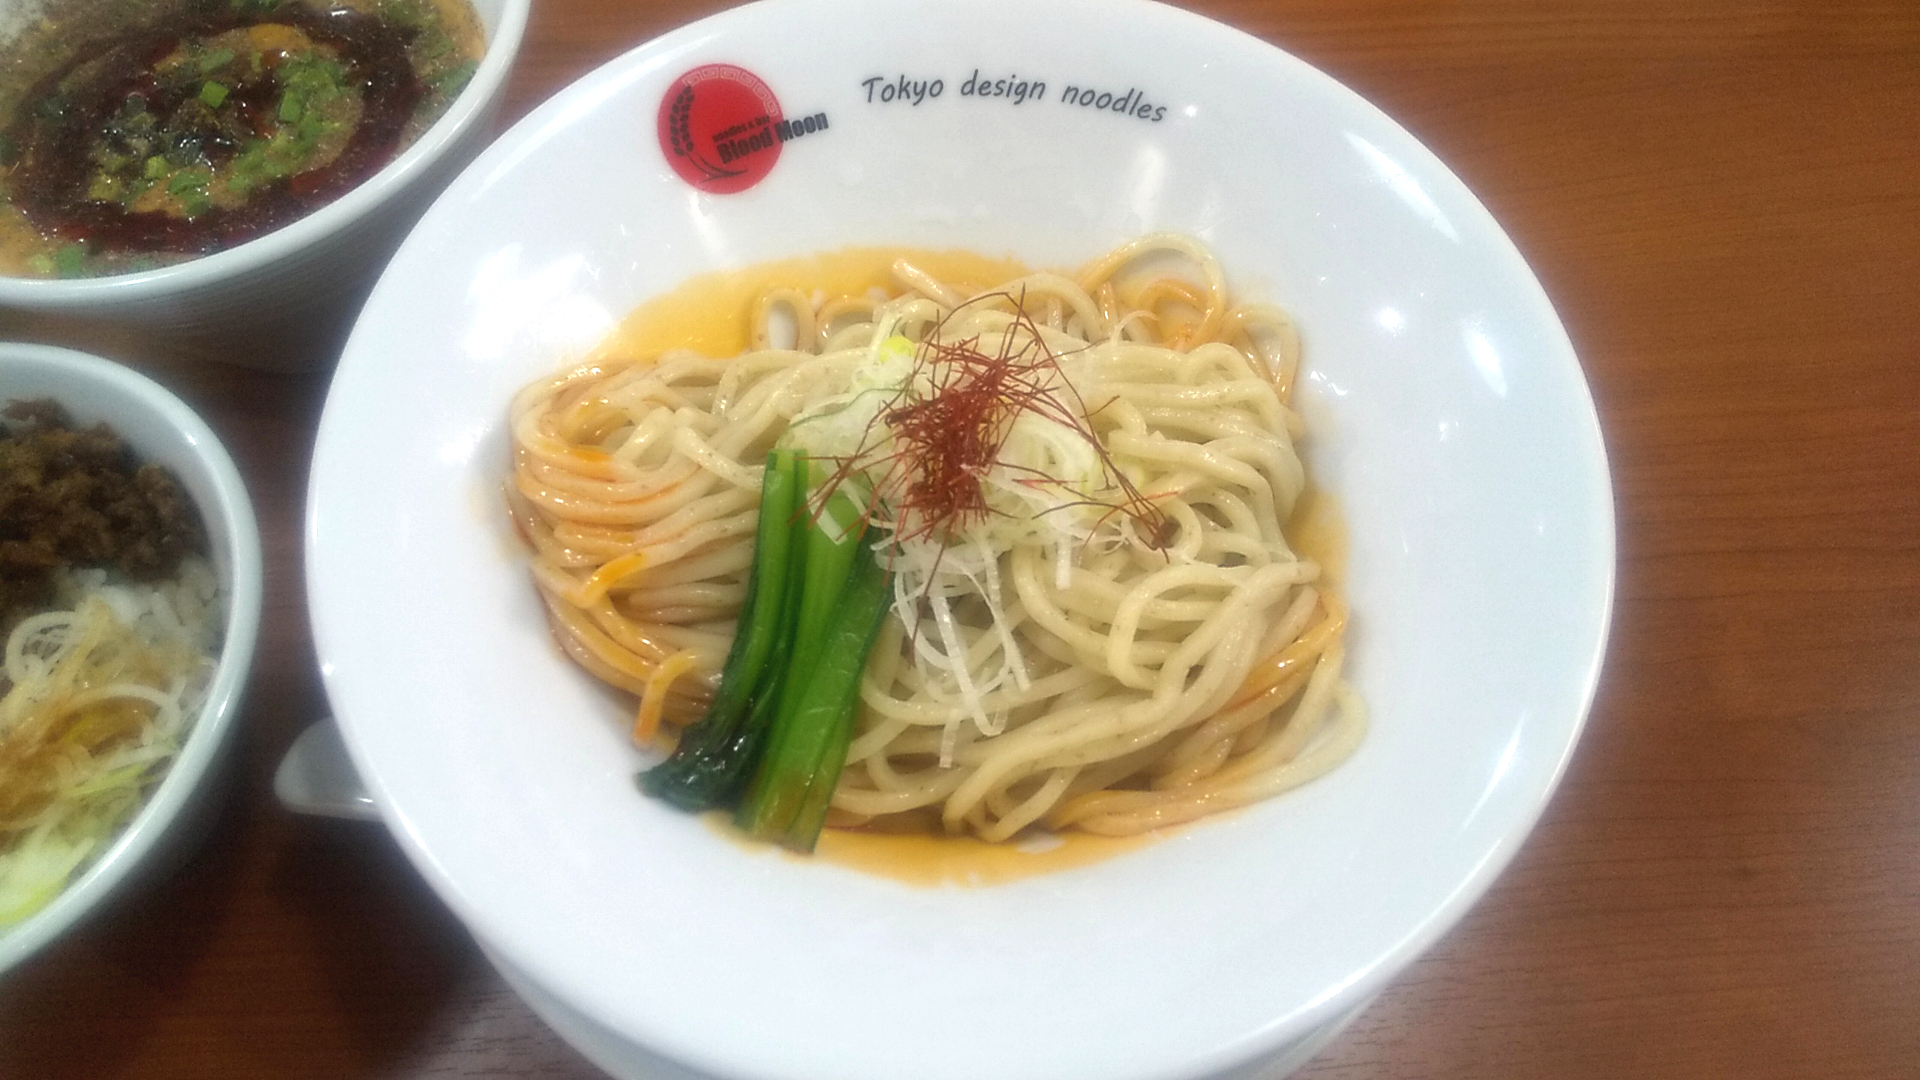 Blood Moon -Tokyo design noodlesの坦々つけ麺の麺皿の写真